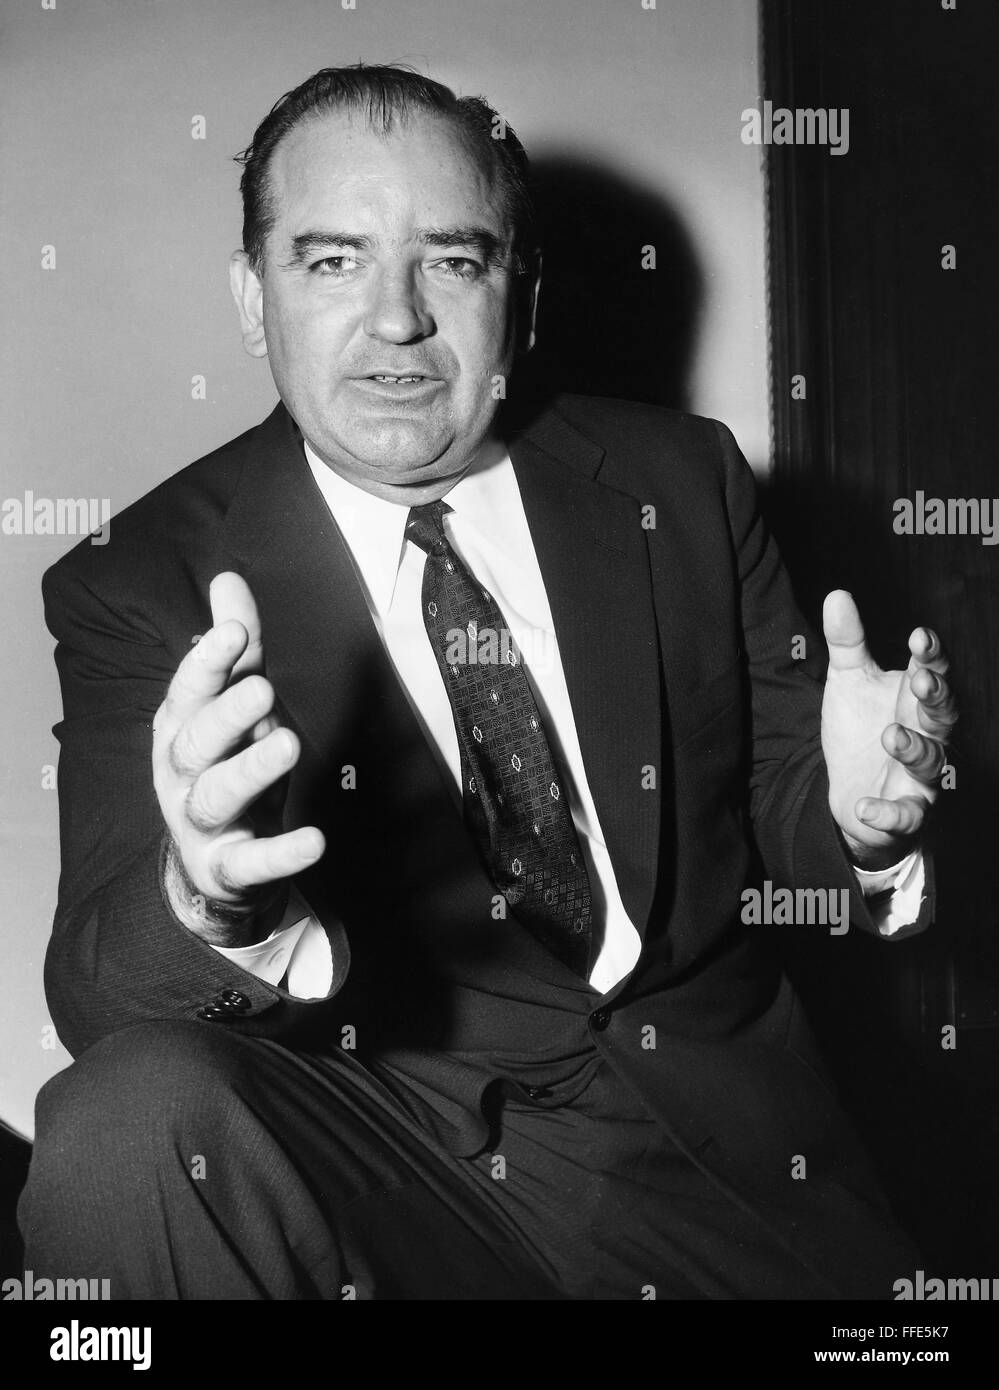 JOSEPH McCARTHY (1908-1957). /nAmerican politician. Photograph, c1955. Stock Photo